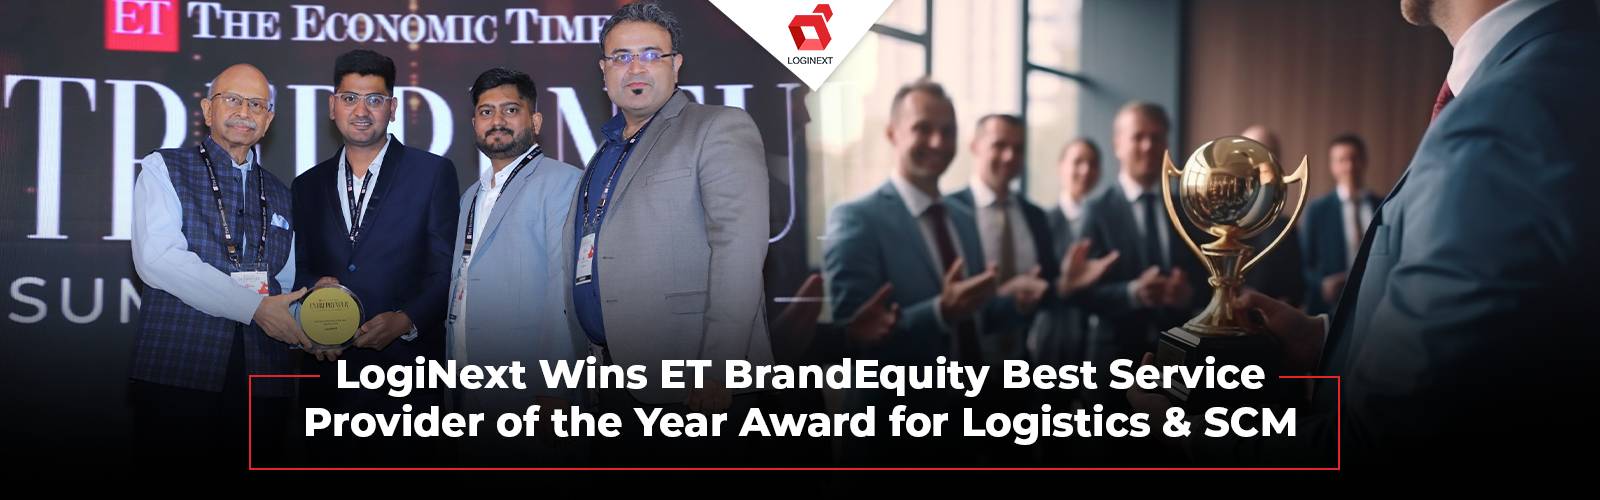 LogiNext Wins ET BrandEquity Award for Logistics & SCM Service